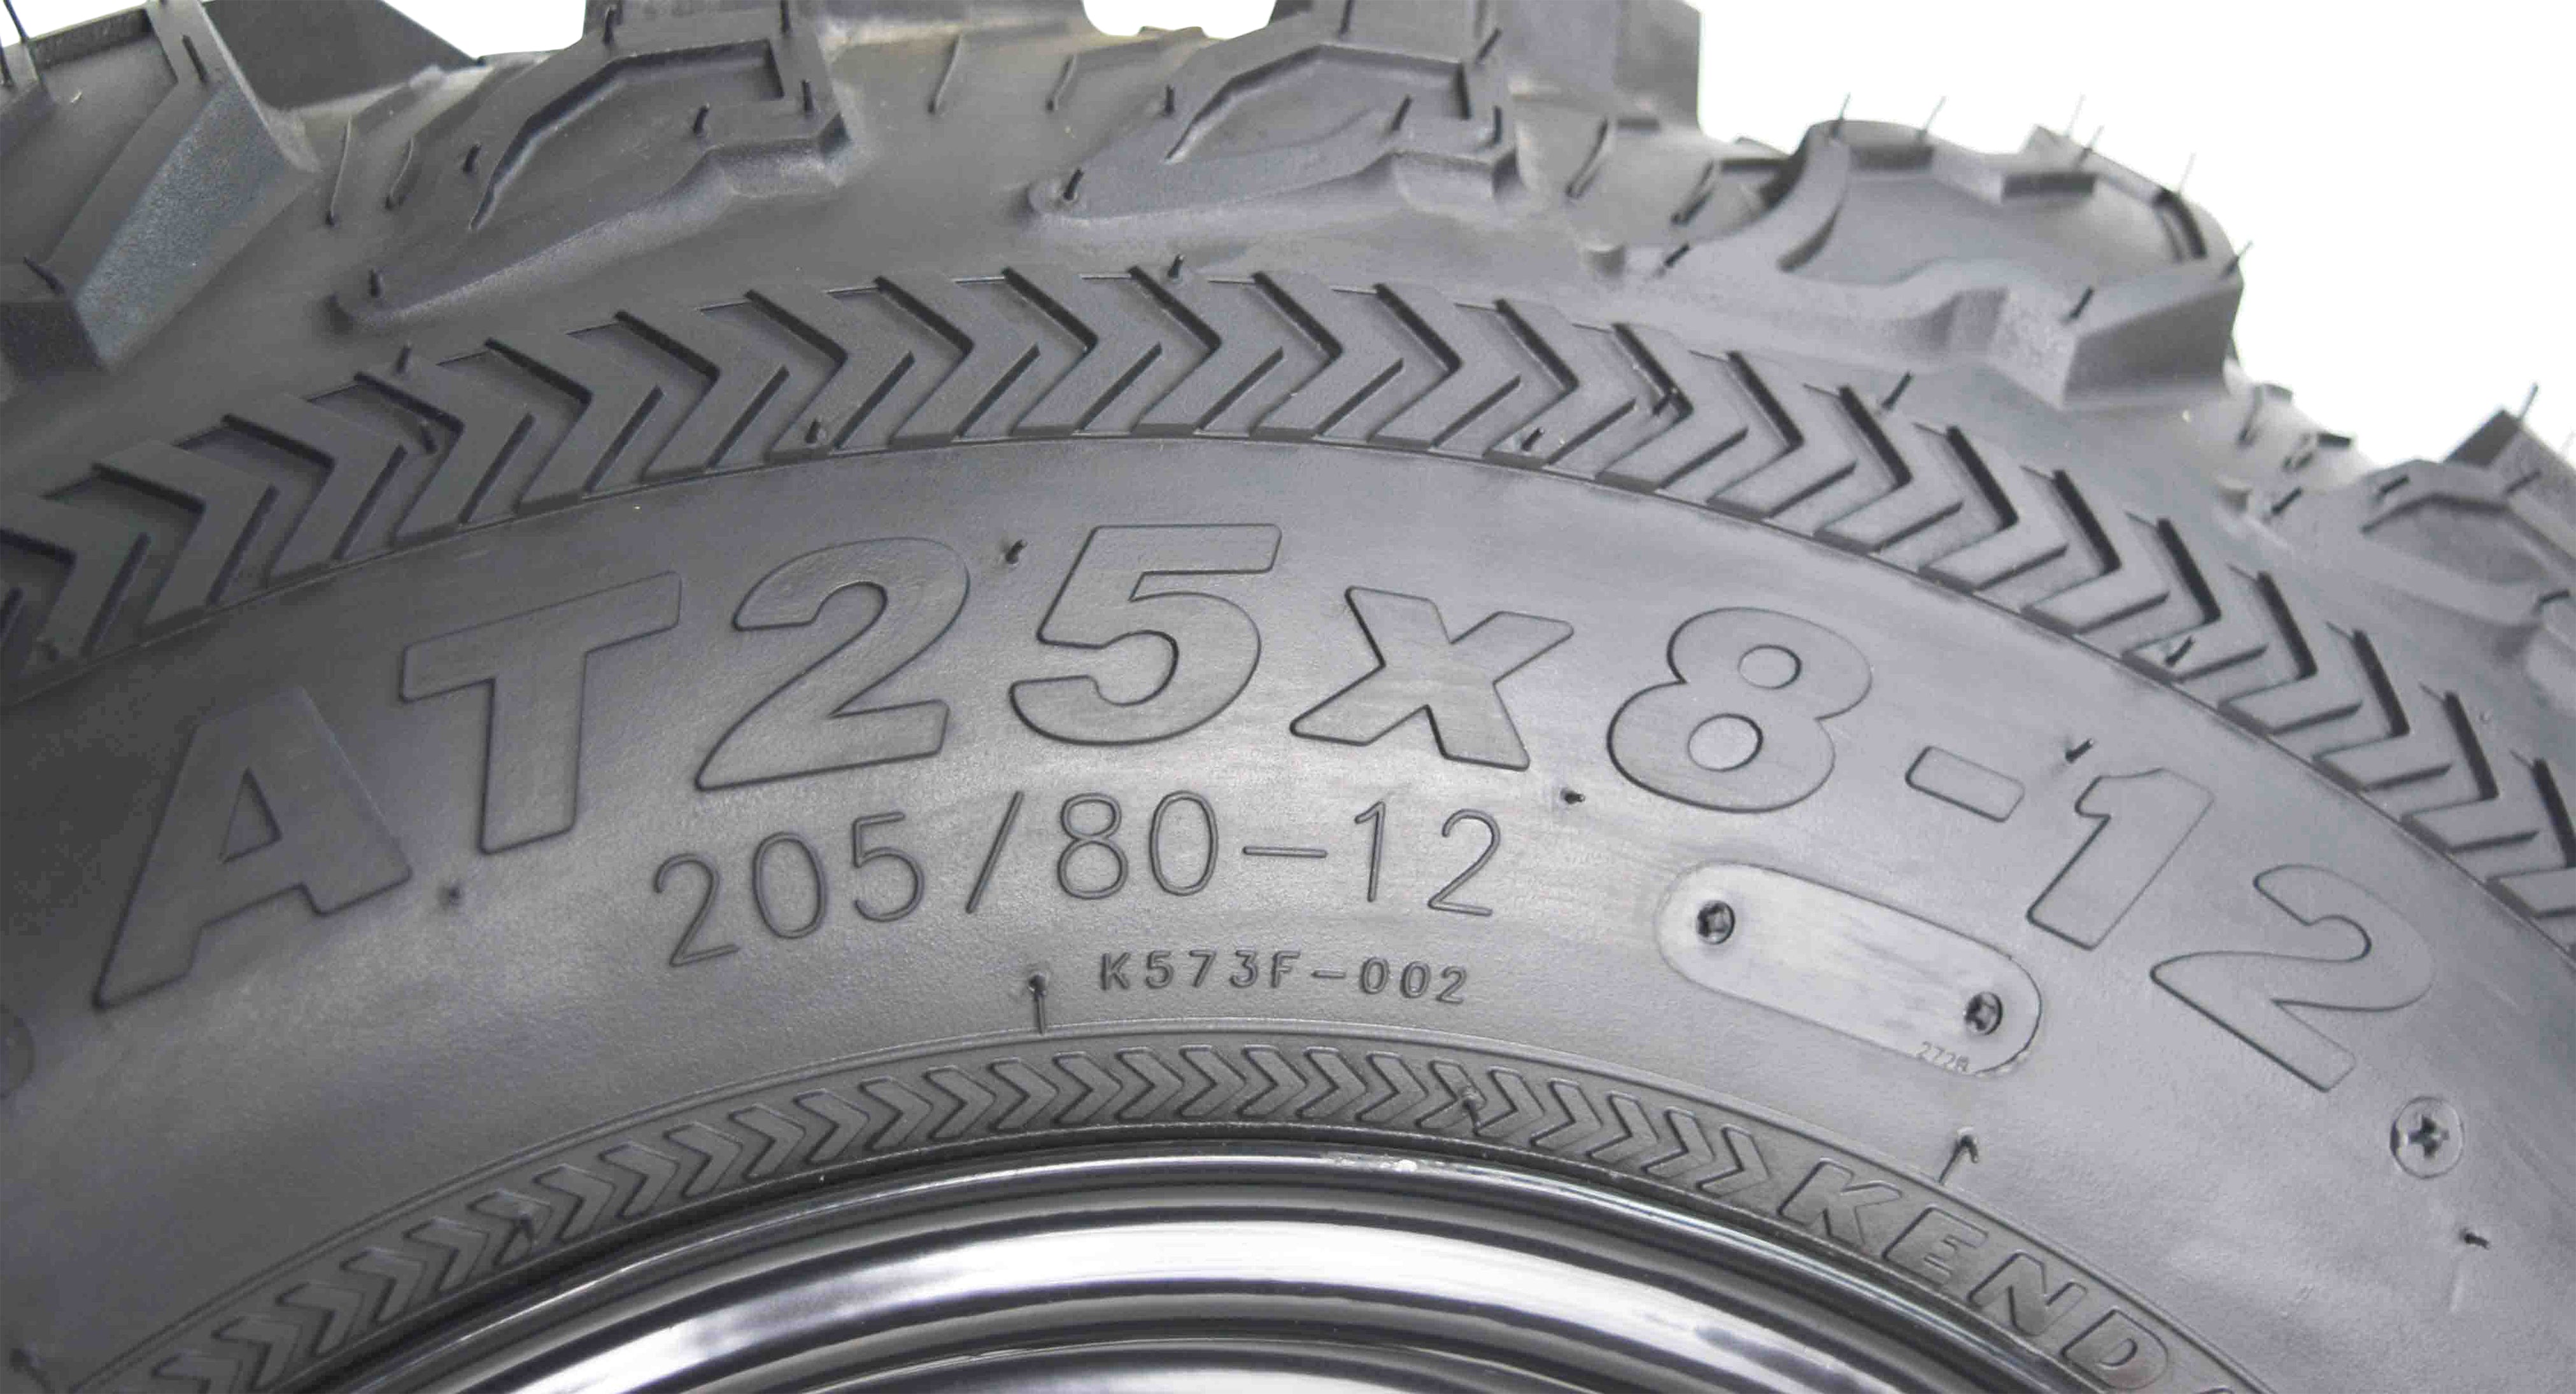 Kenda Bear Claw EX 25x8-12 F 25x11-10 R ATV 6 PLY Tires Bearclaw - 4 Pack Set